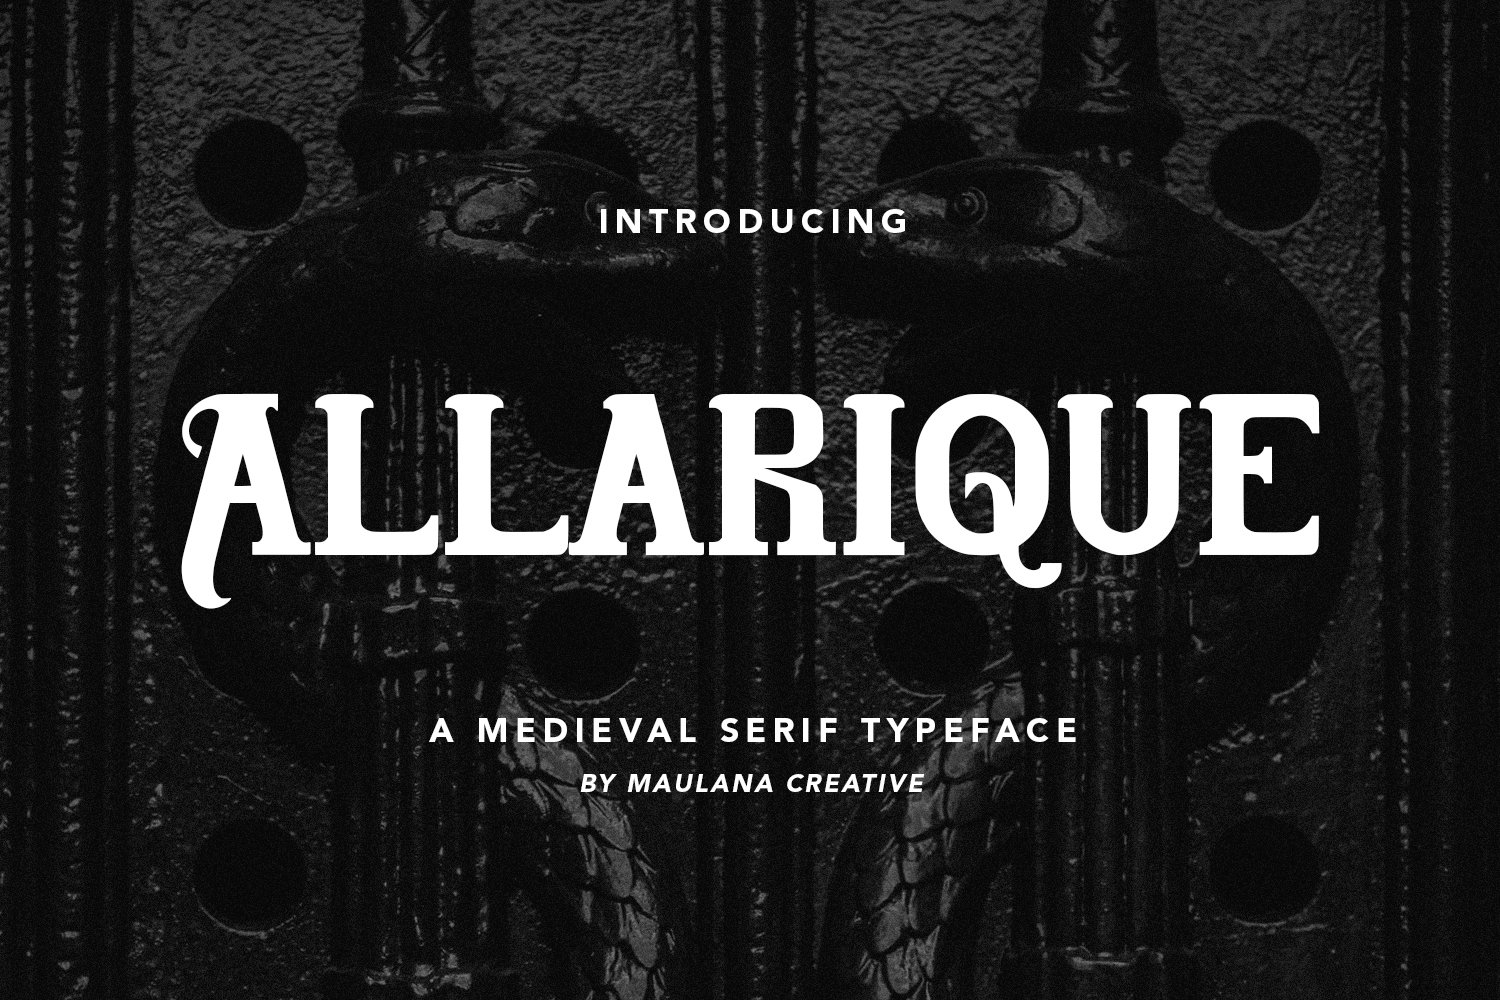 Allarique Medieval Serif Typeface cover image.